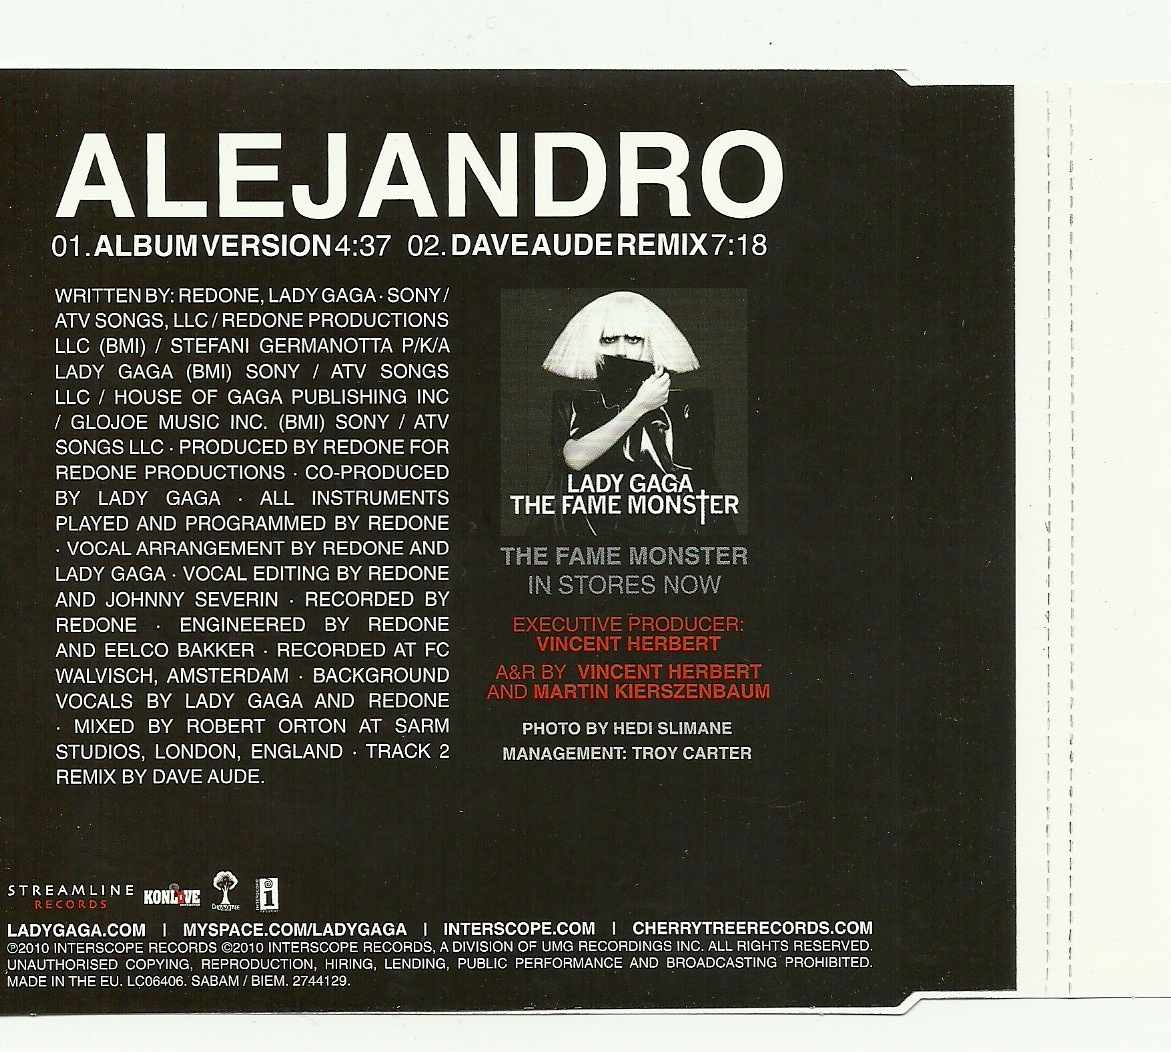 Перевод песен леди гаги на русский. Alejandro обложка. Песня Алехандро текст. Lady Gaga Alejandro обложка. Песня со словами Алехандро.